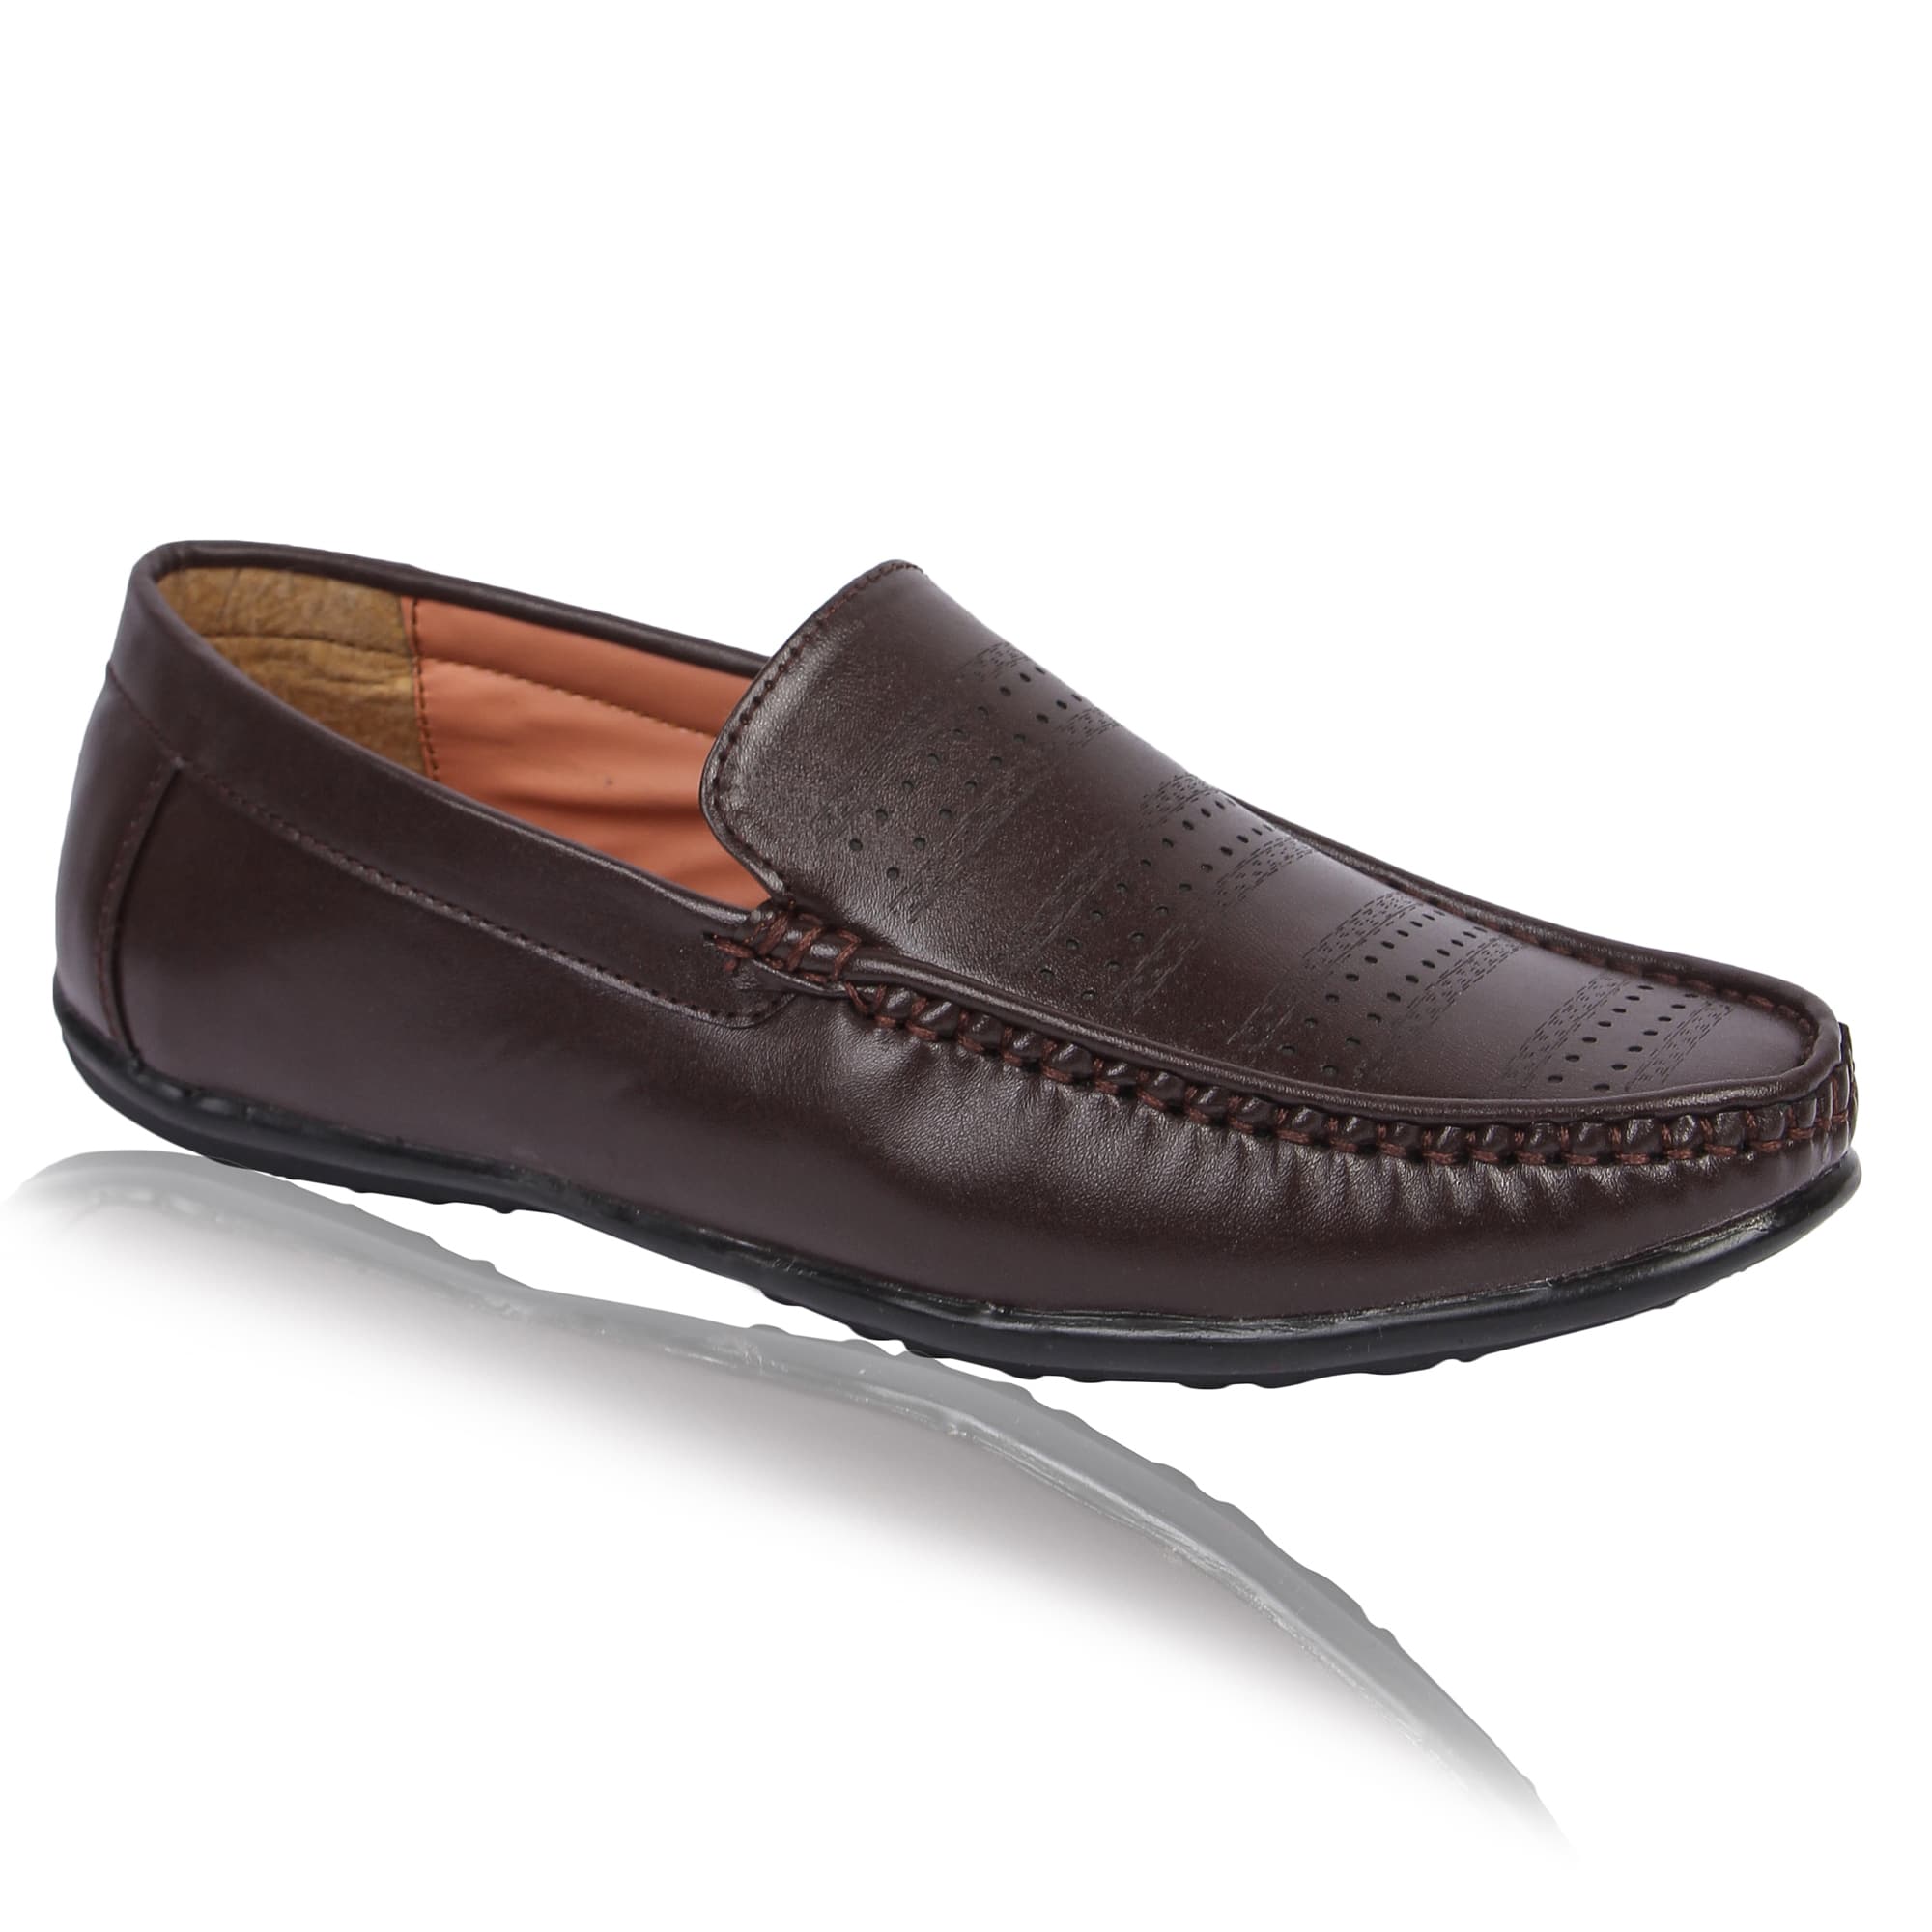 Sg 006 Brown-min | Online Store for Men Footwear in India